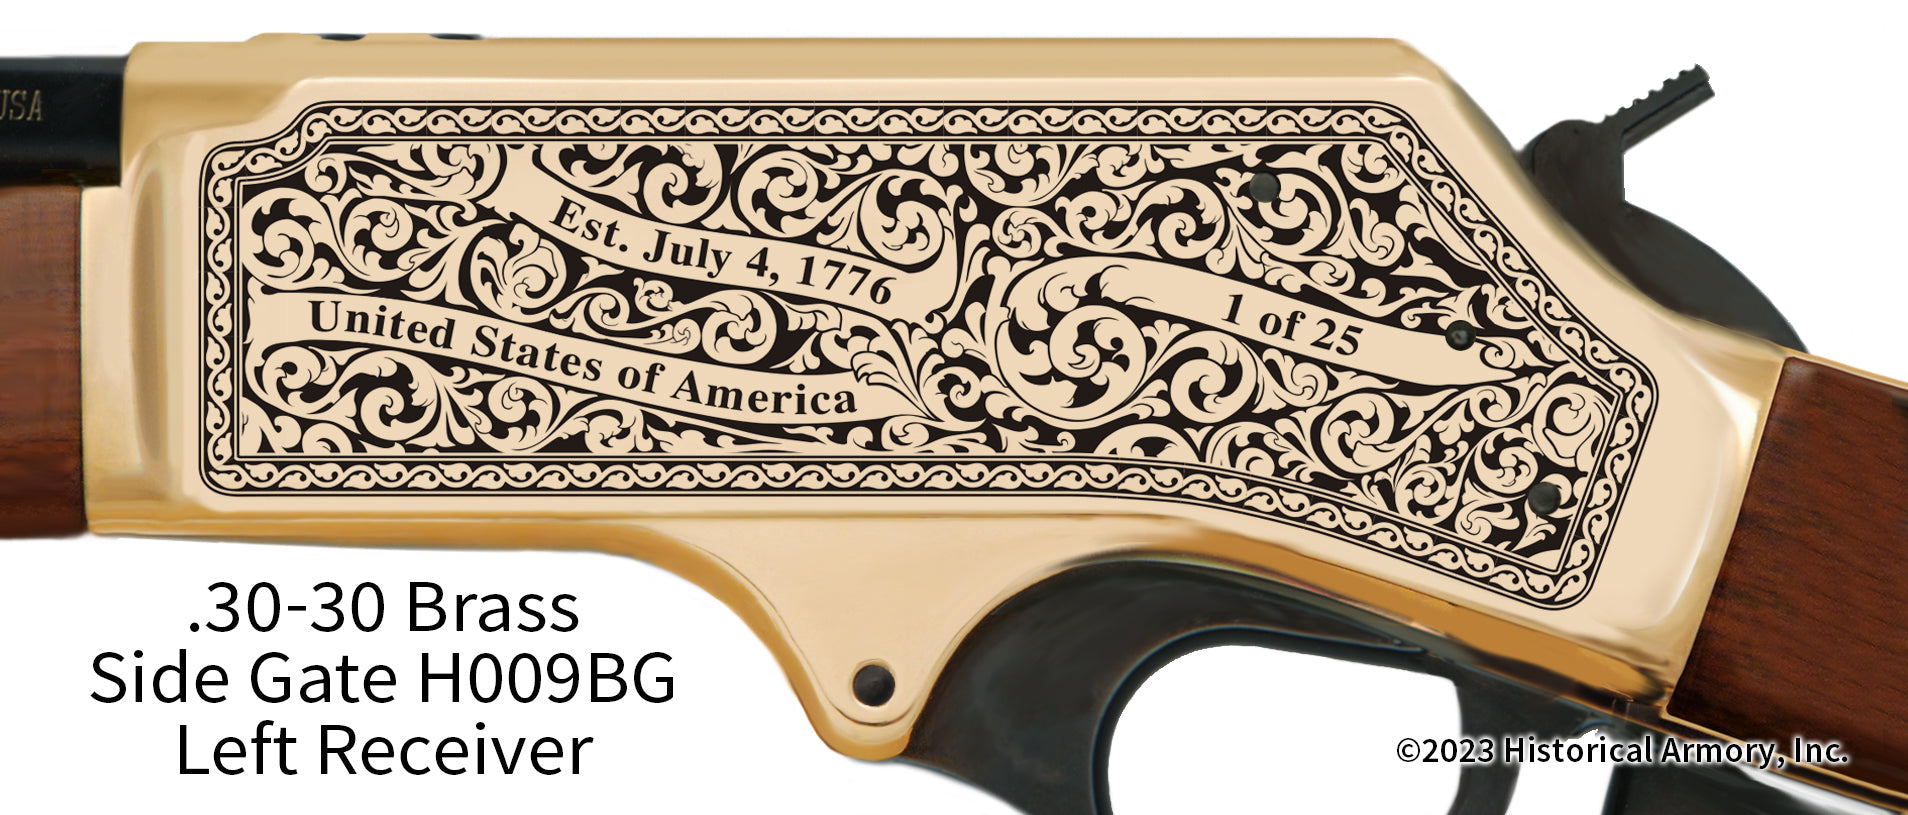 Eddy County North Dakota Engraved Henry .30-30 Brass Side Gate Rifle